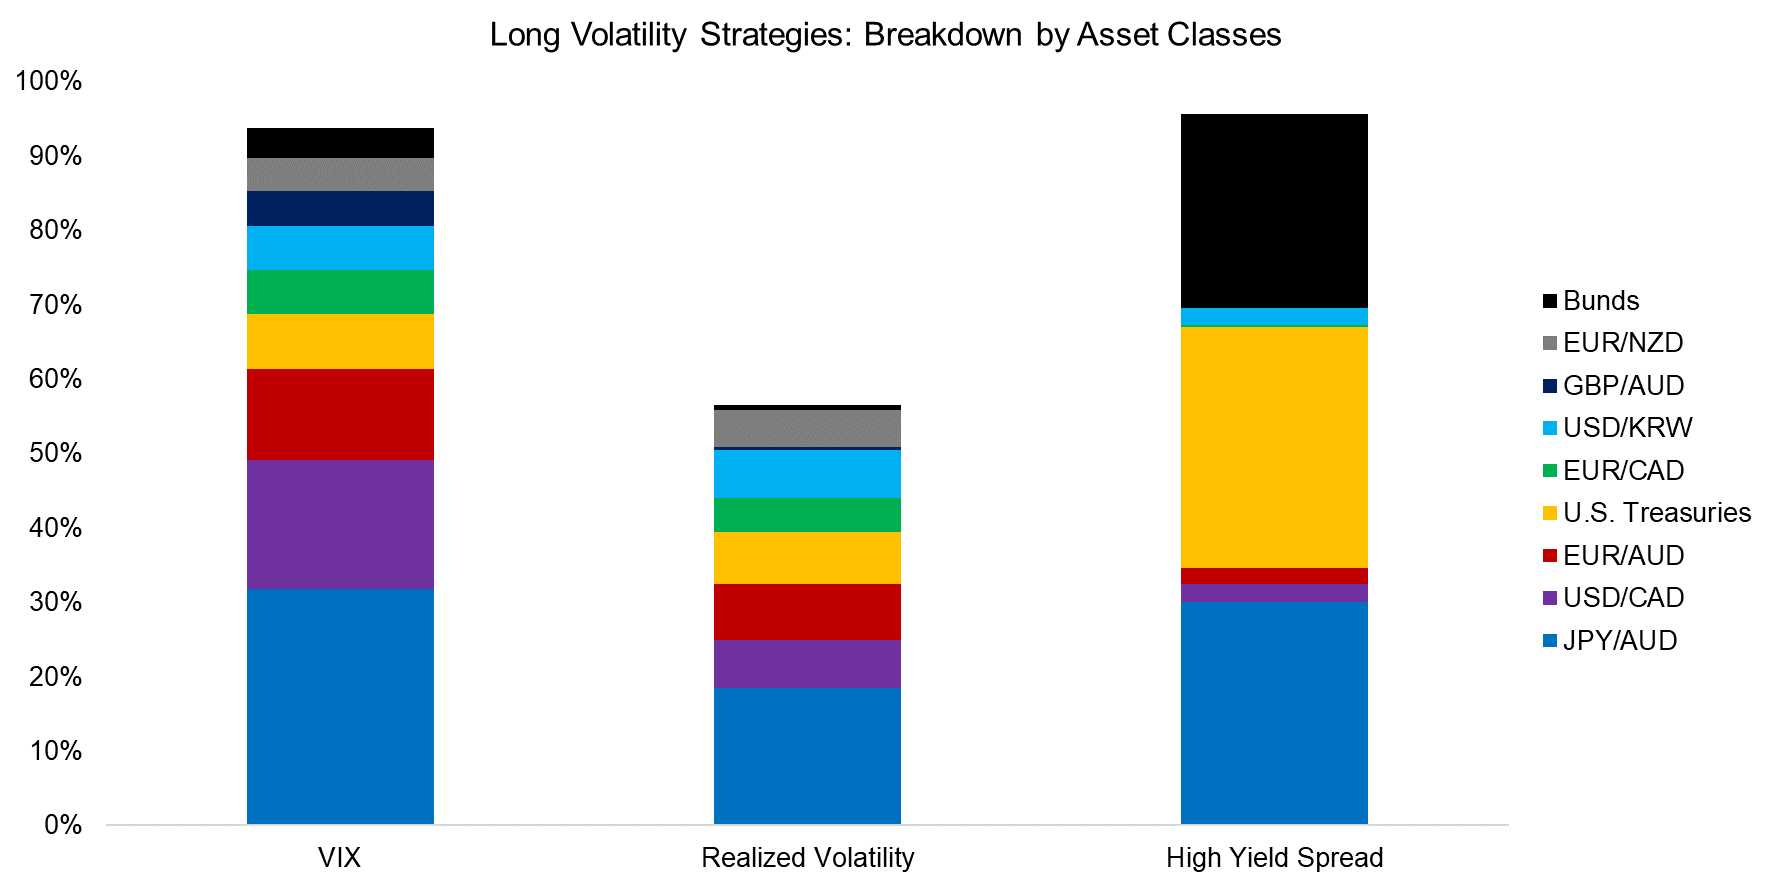 Long Volatility Strategies Breakdown by Asset Classes